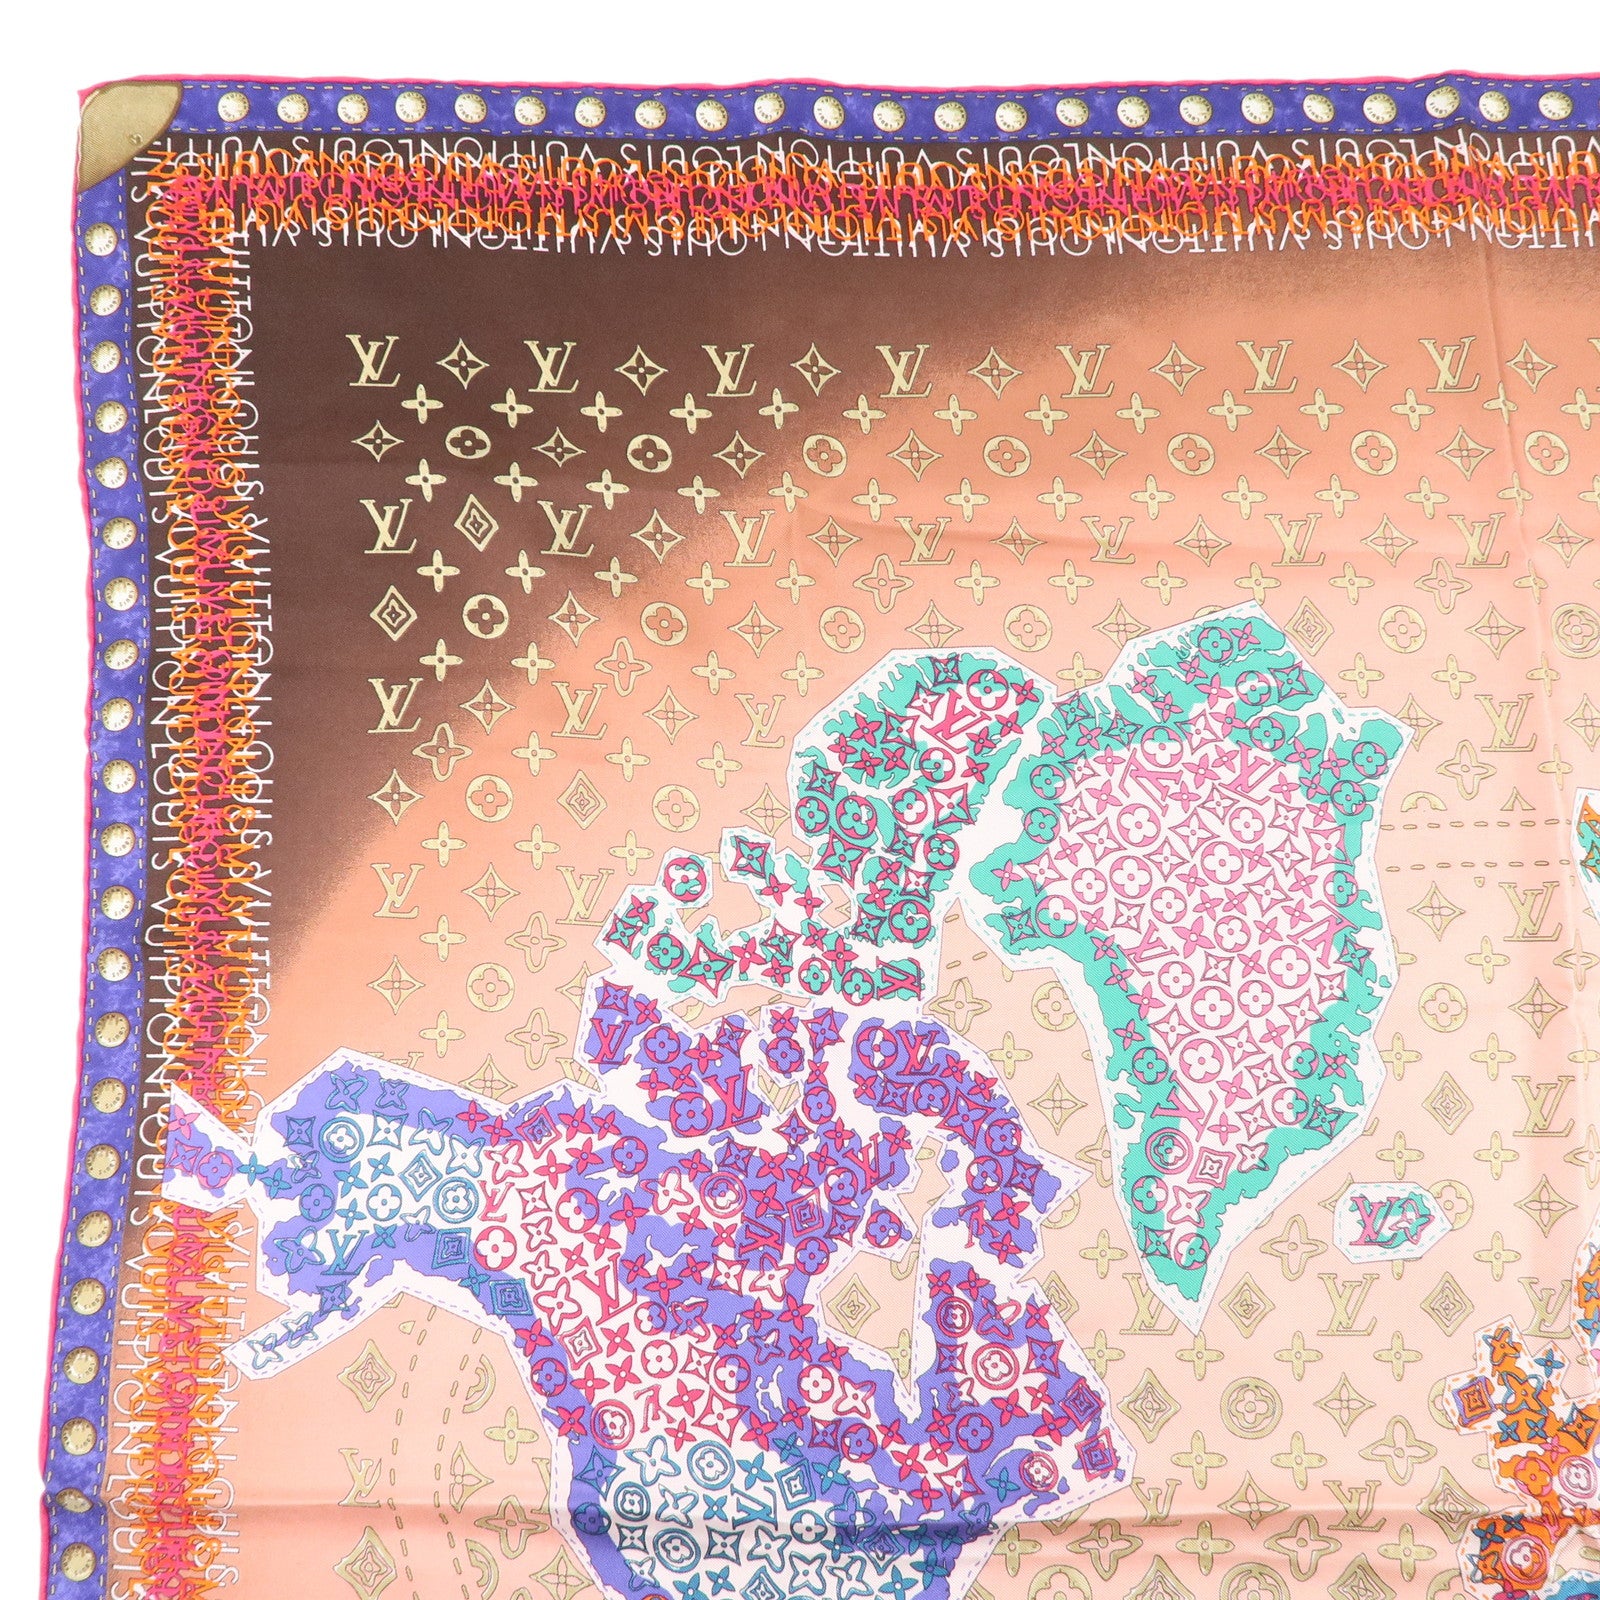 Louis Vuitton - Monogram Map Silk Purple Scarf